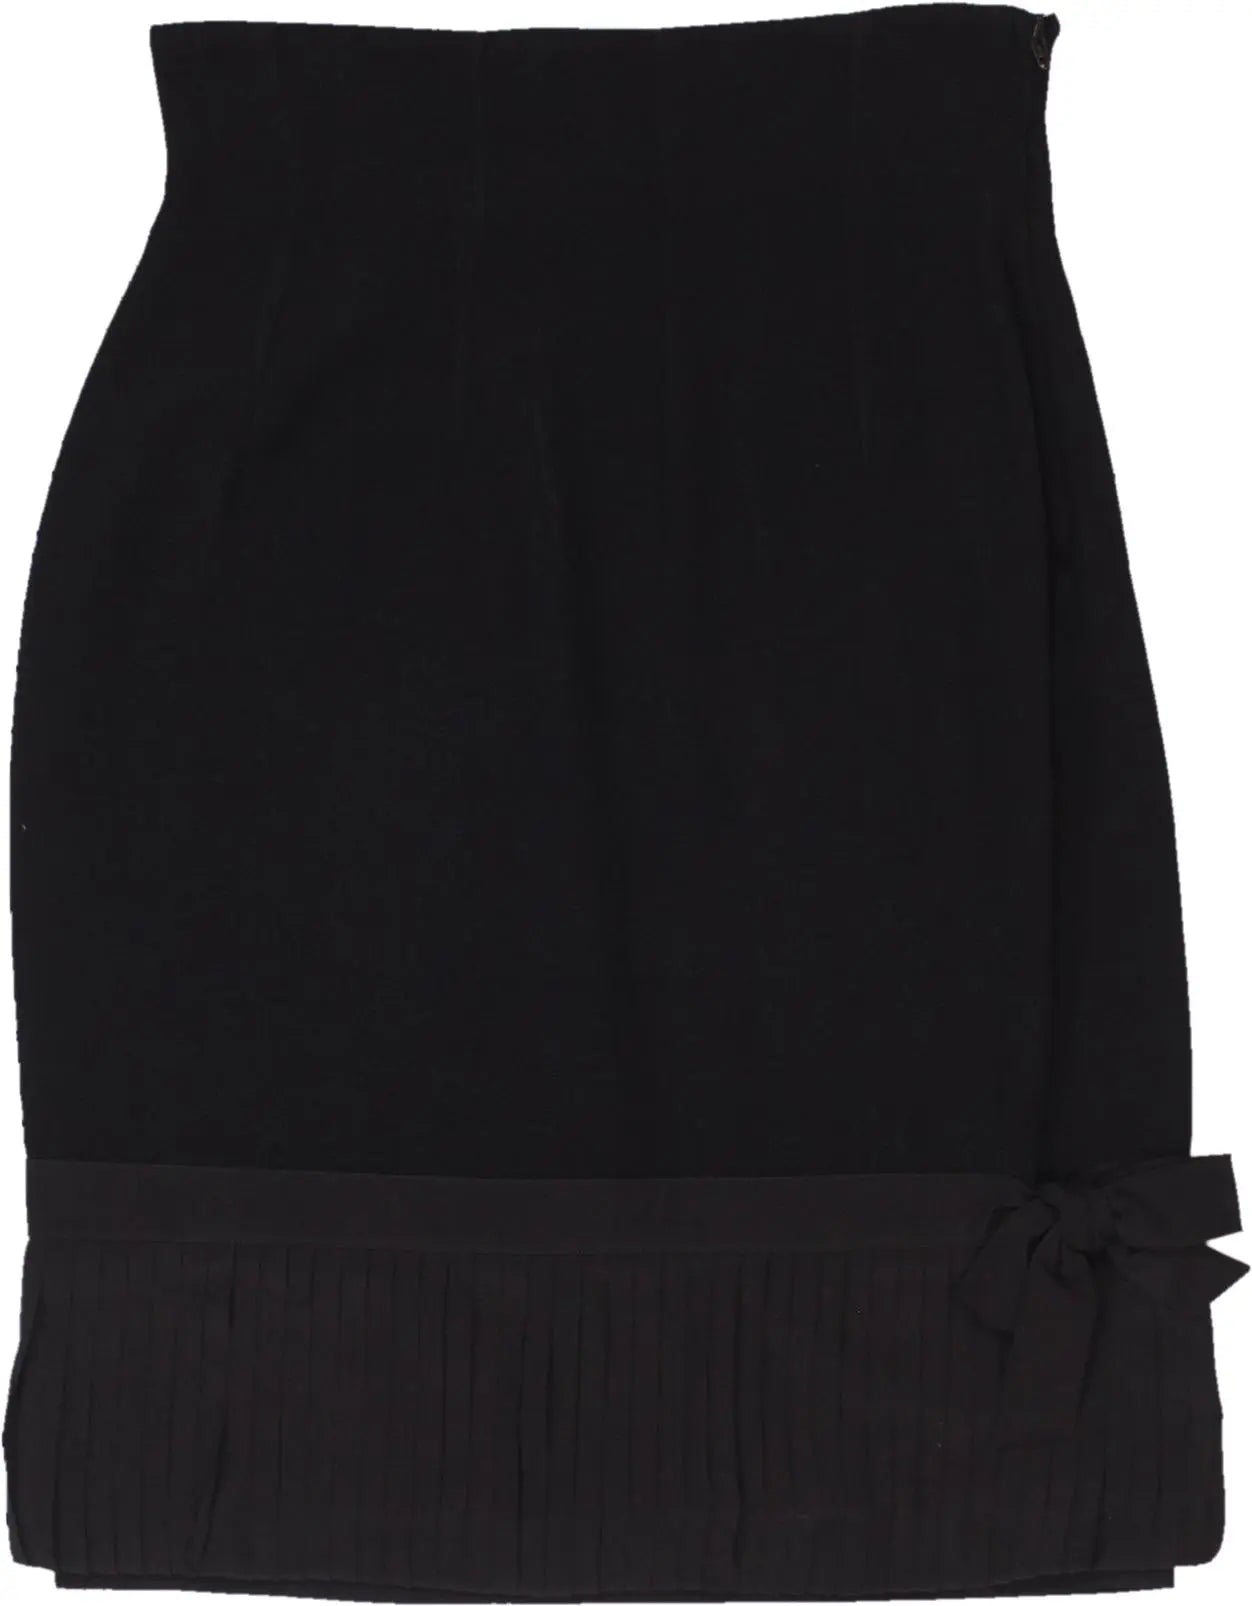 Alberta Ferretti - Black Bow Skirt by Alberta Ferretti- ThriftTale.com - Vintage and second handclothing